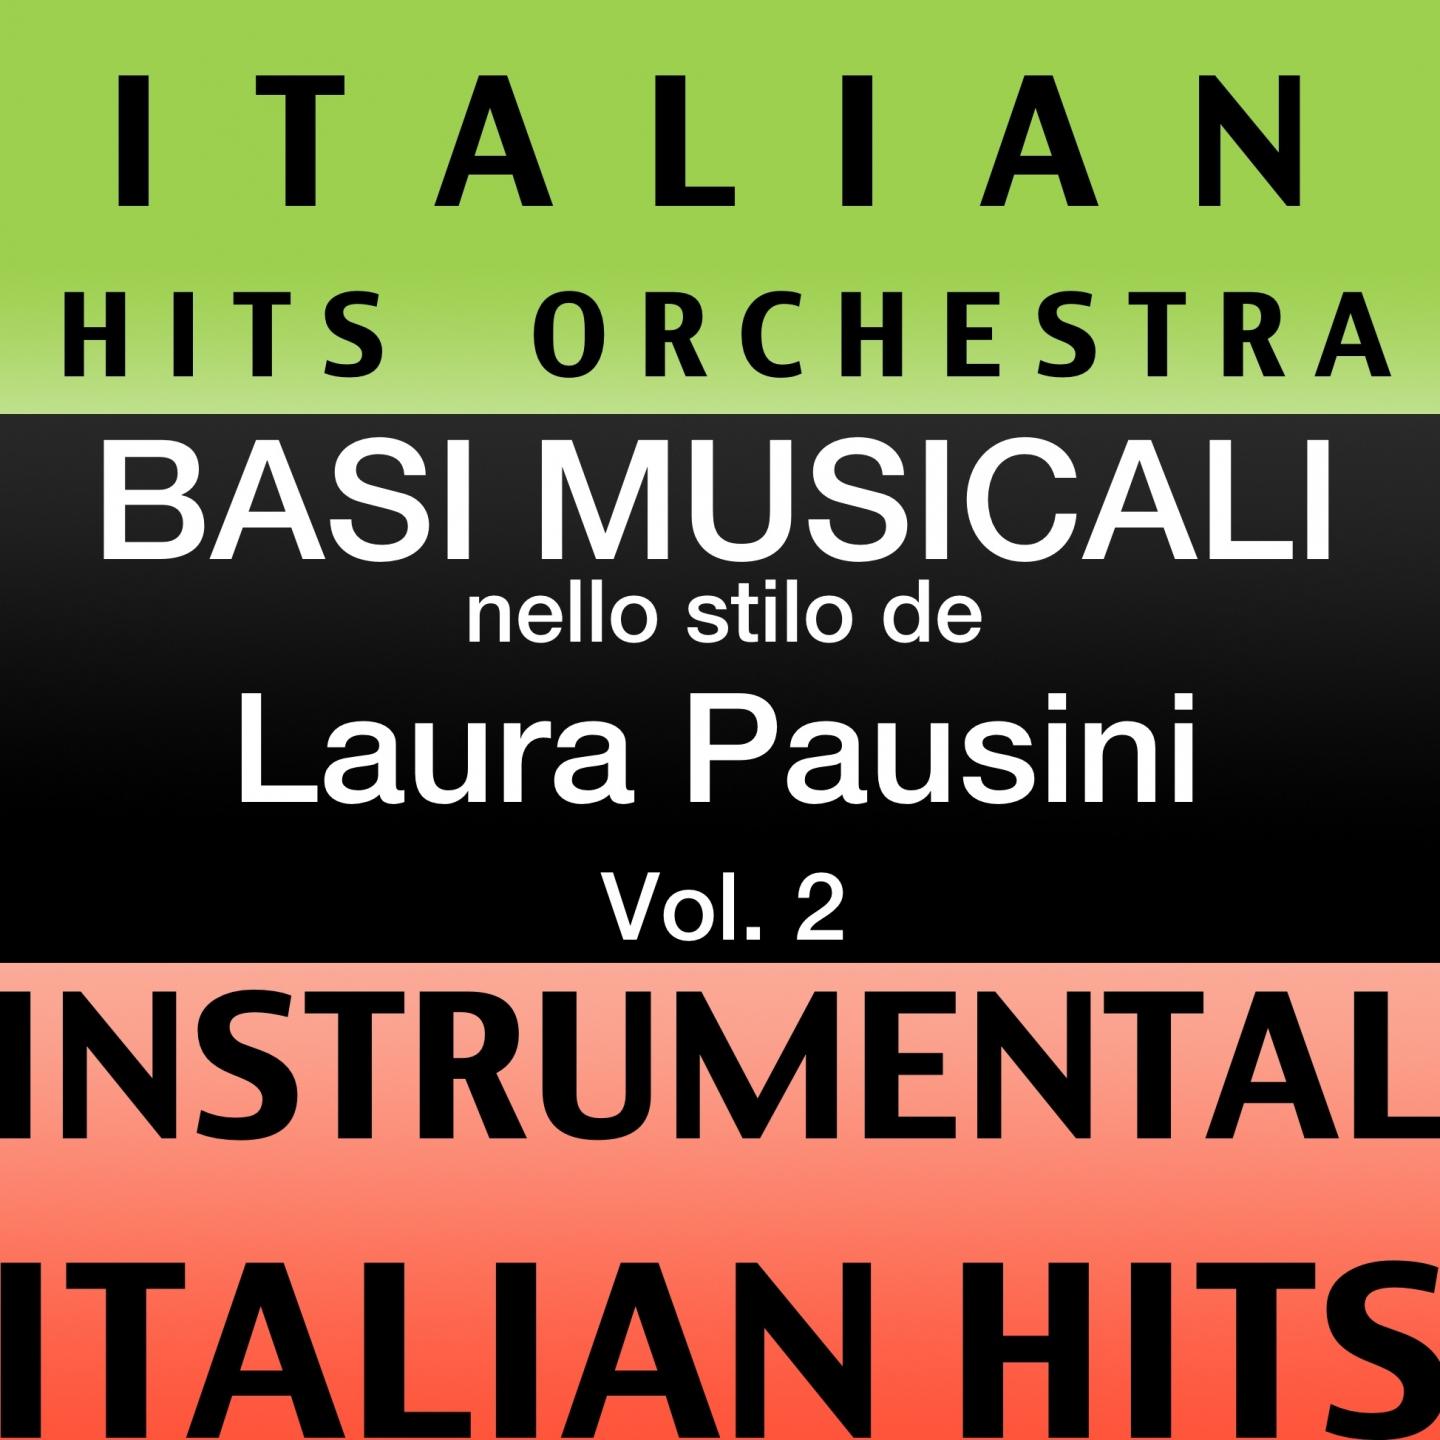 Basi musicale nello stilo dei laura pausini (instrumental karaoke tracks), Vol. 2